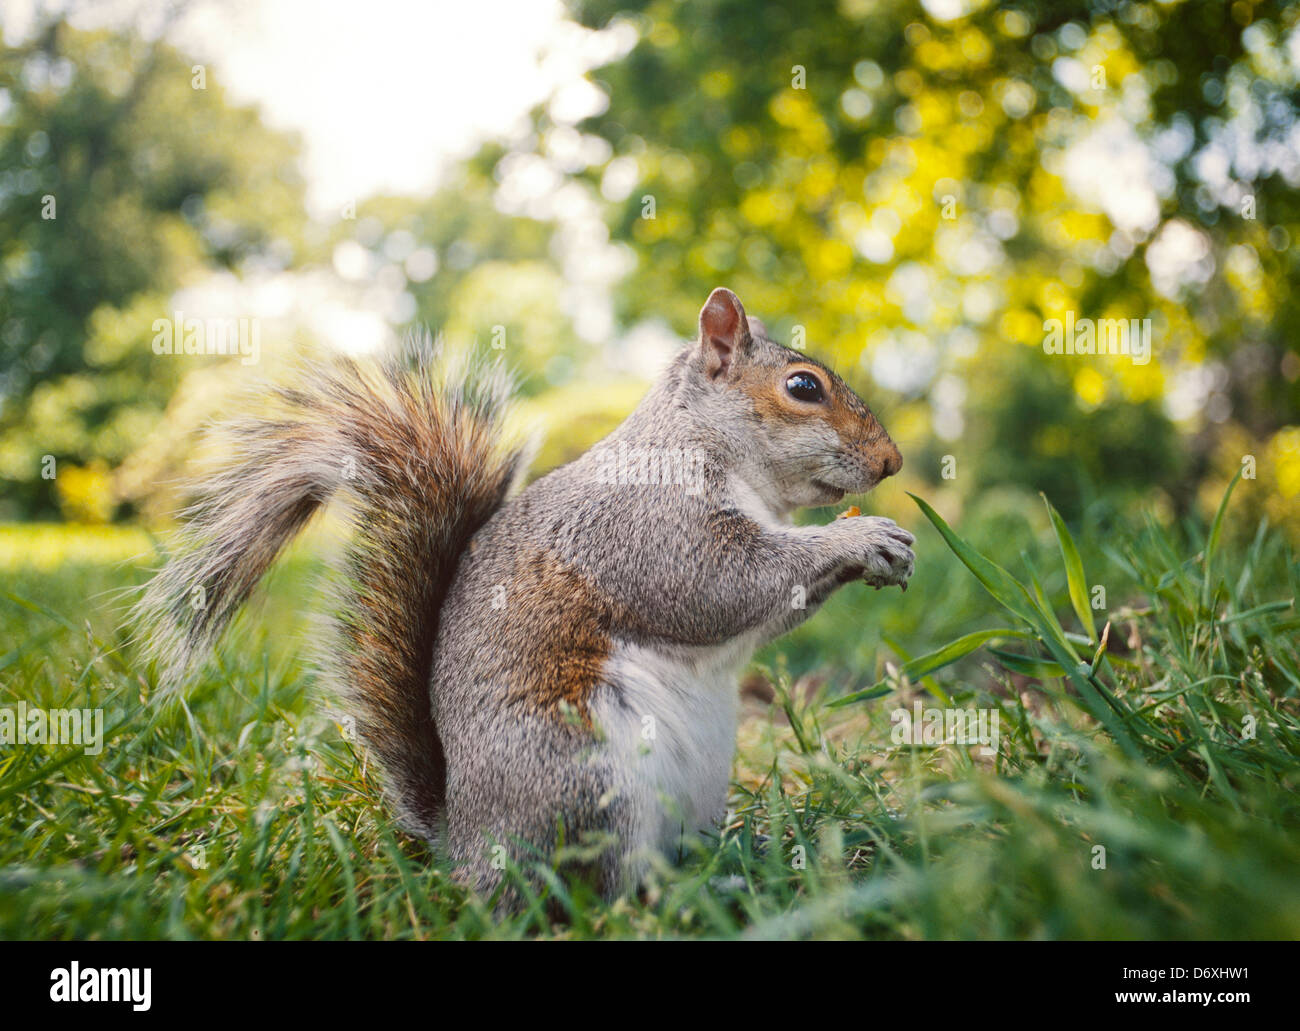 Grey squirrel, Sciurus carolinensis, in classic feeding pose, low viewpoint, grass Stock Photo